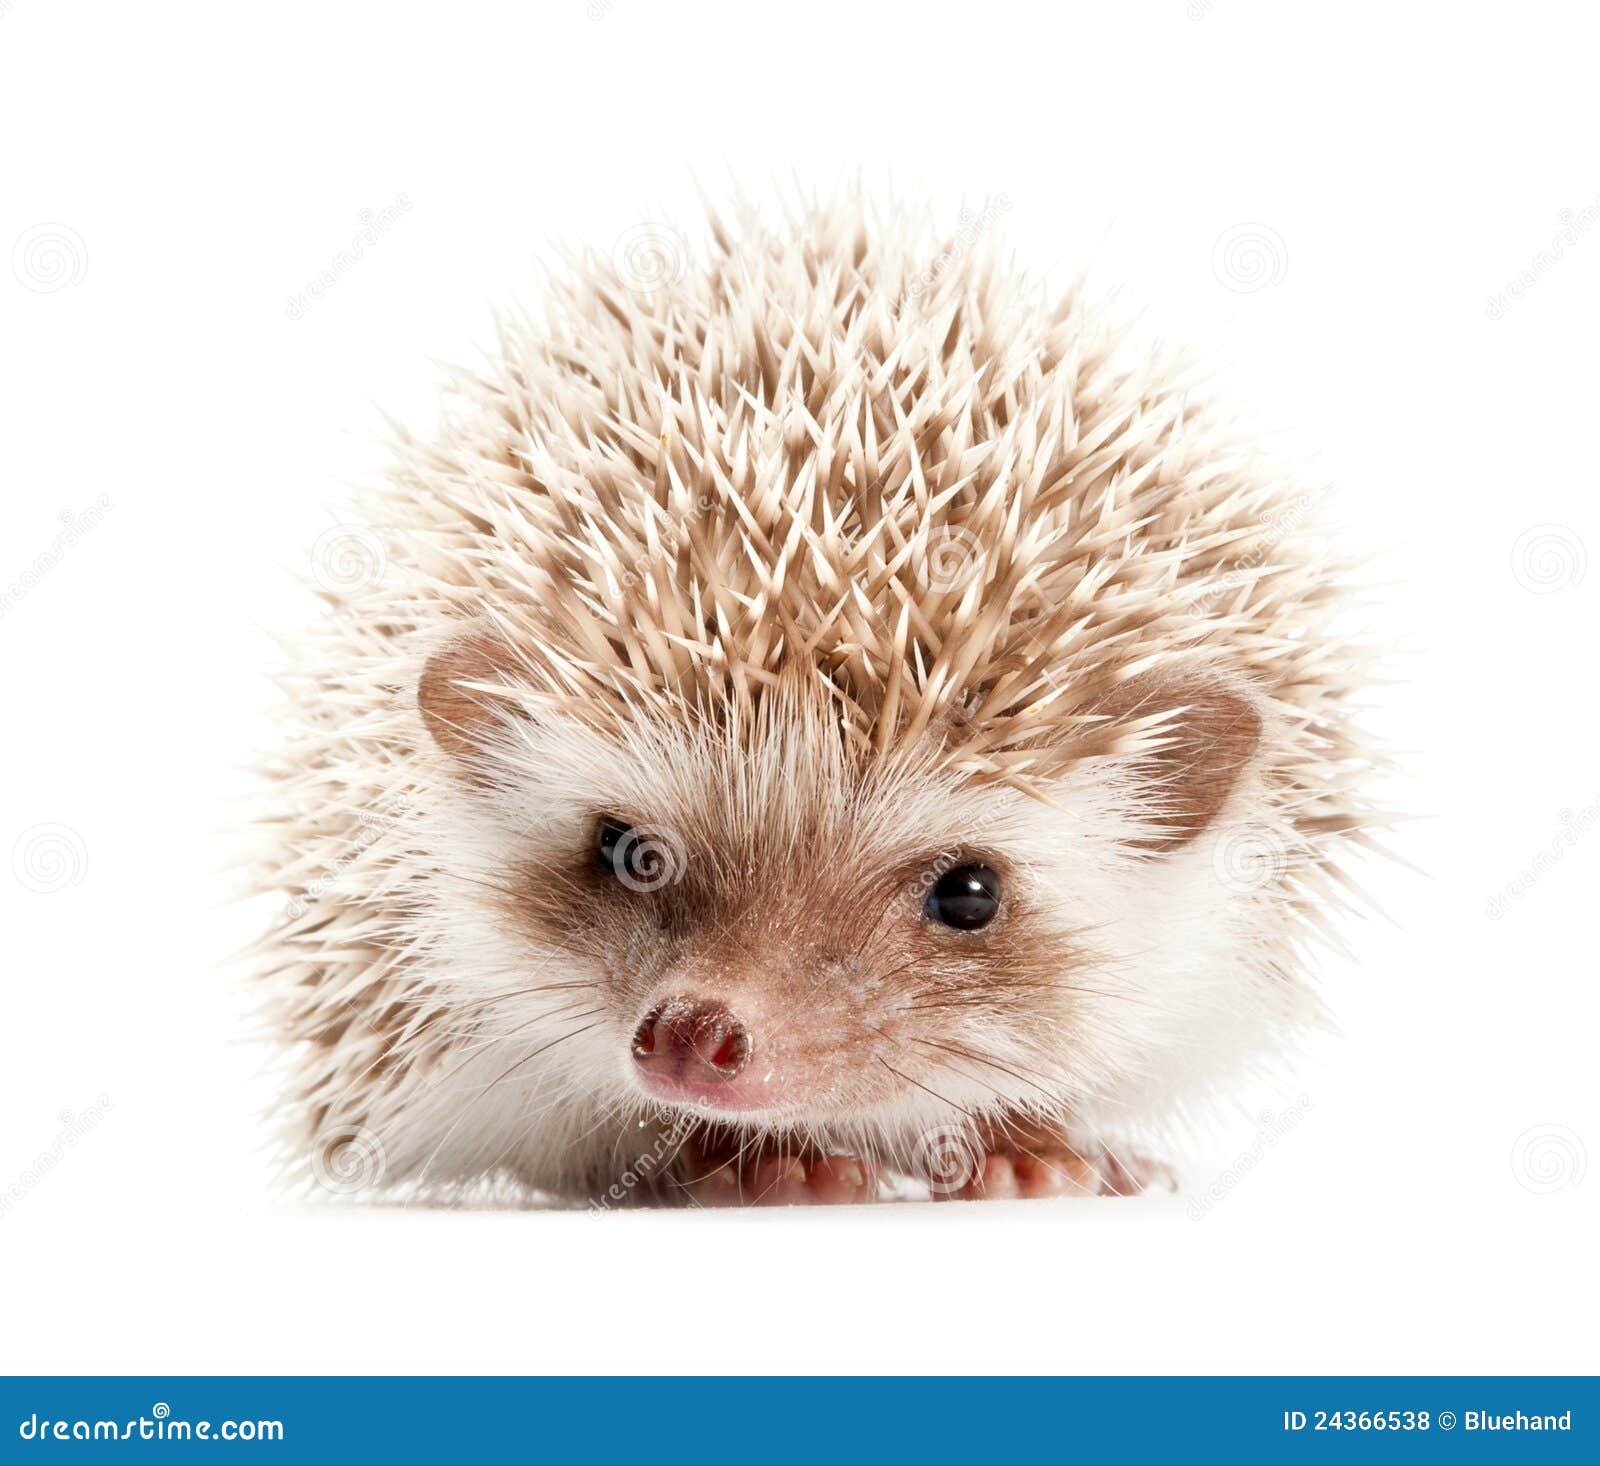 hedgehog isolate on white background